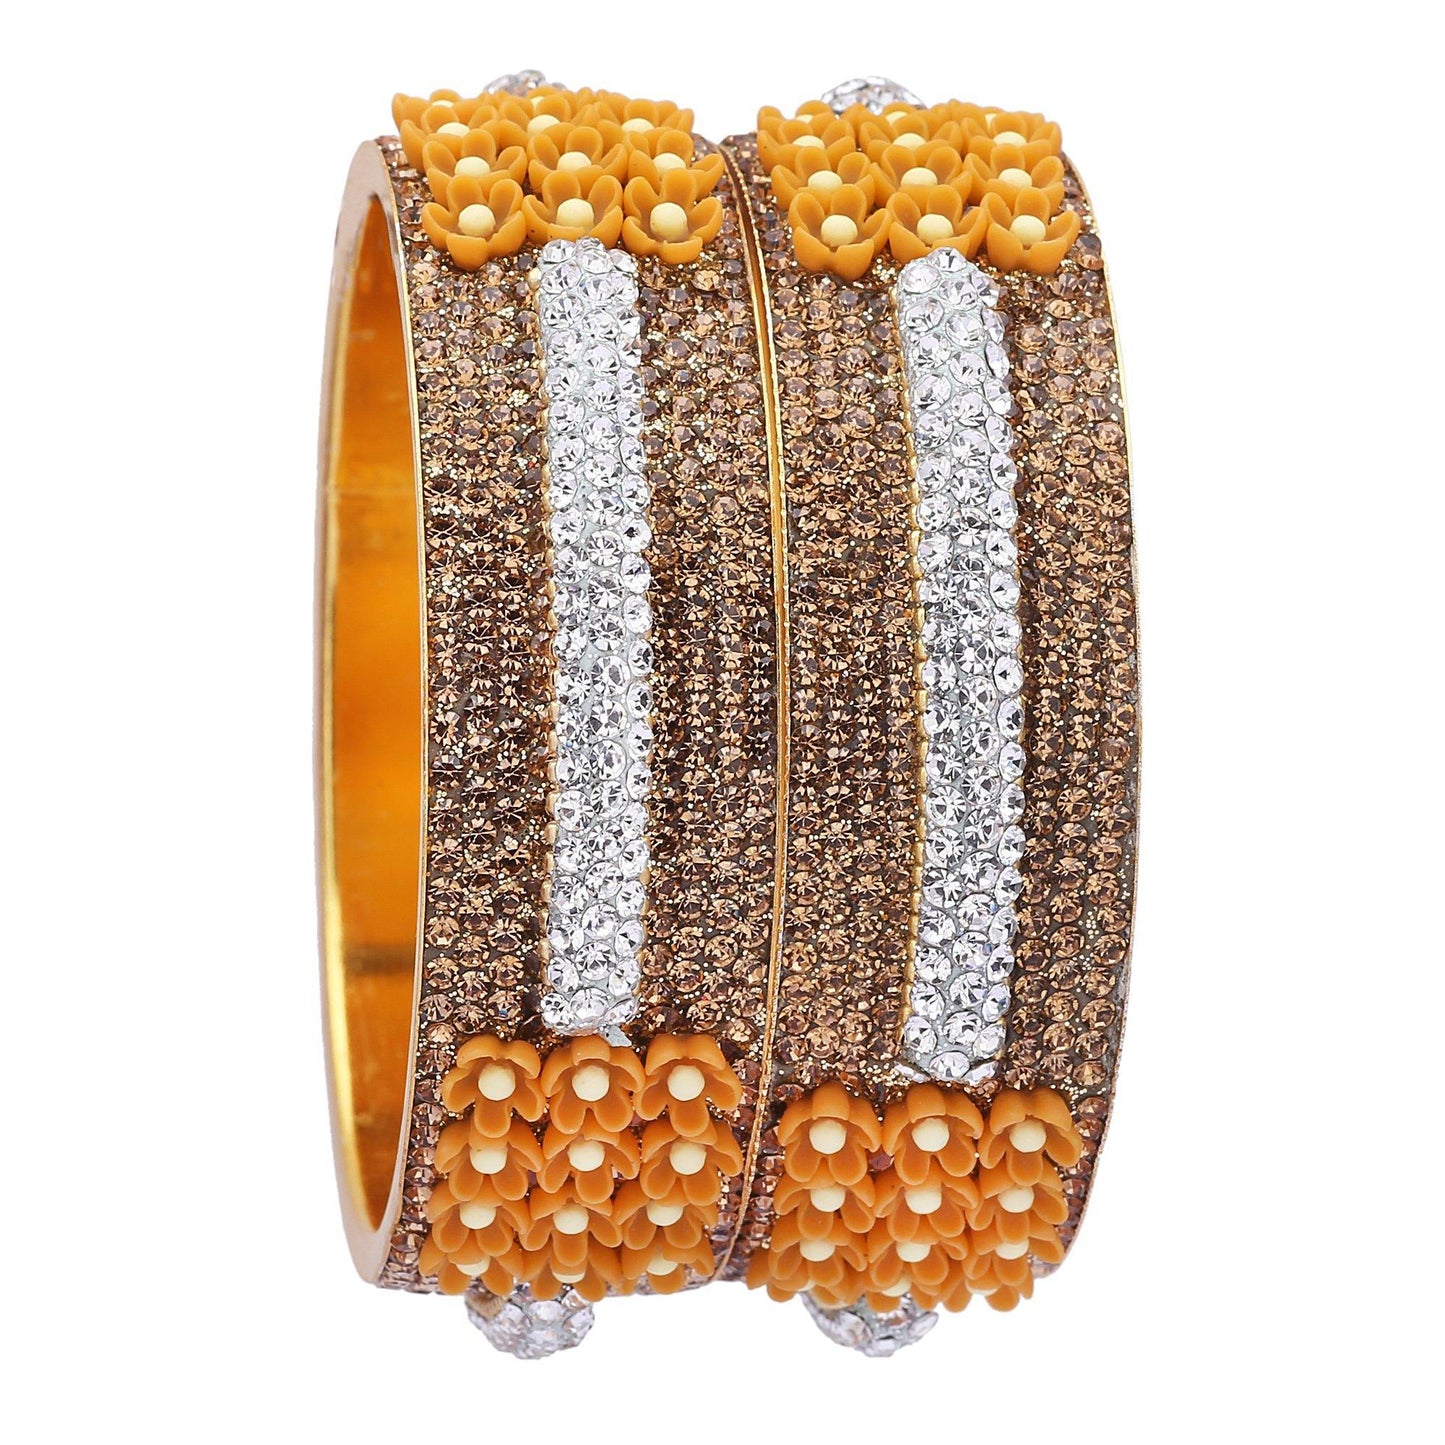 sukriti beautiful partywear flower brass kada gold-white bangles for women – set of 2